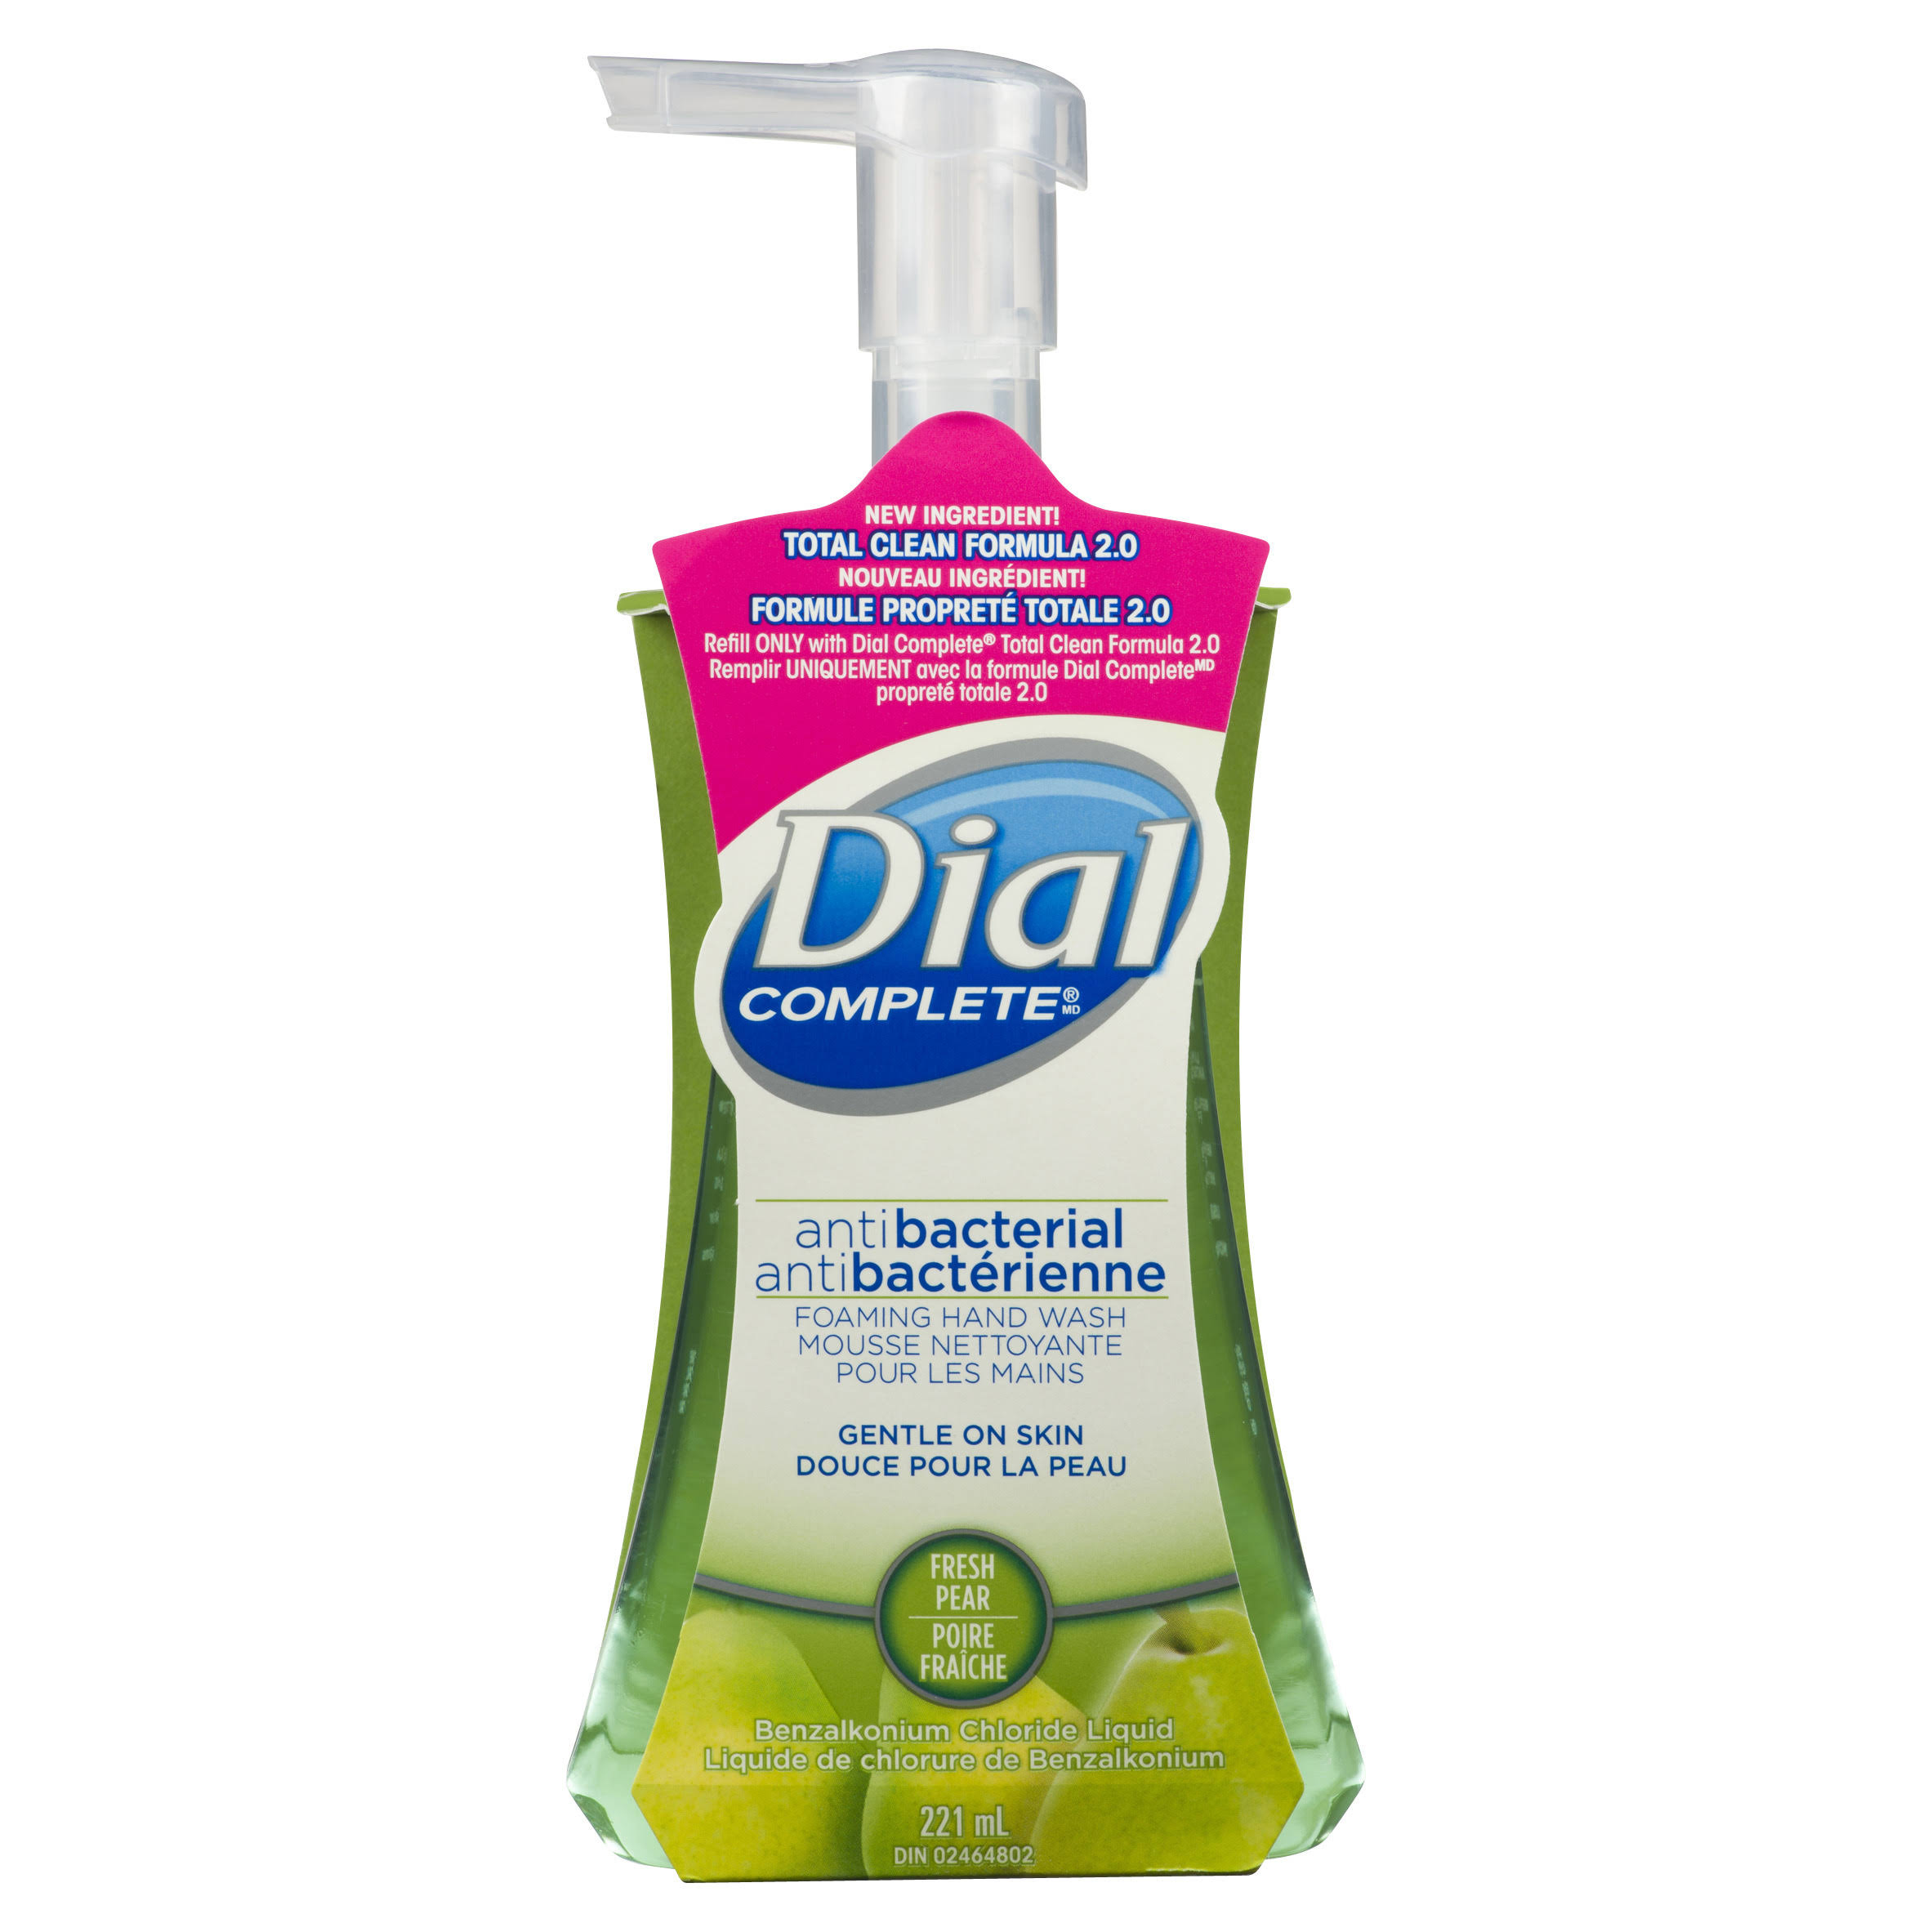 Dial Complete Antibacterial Foaming Hand Wash Pump, Fresh Pear, 221 ml